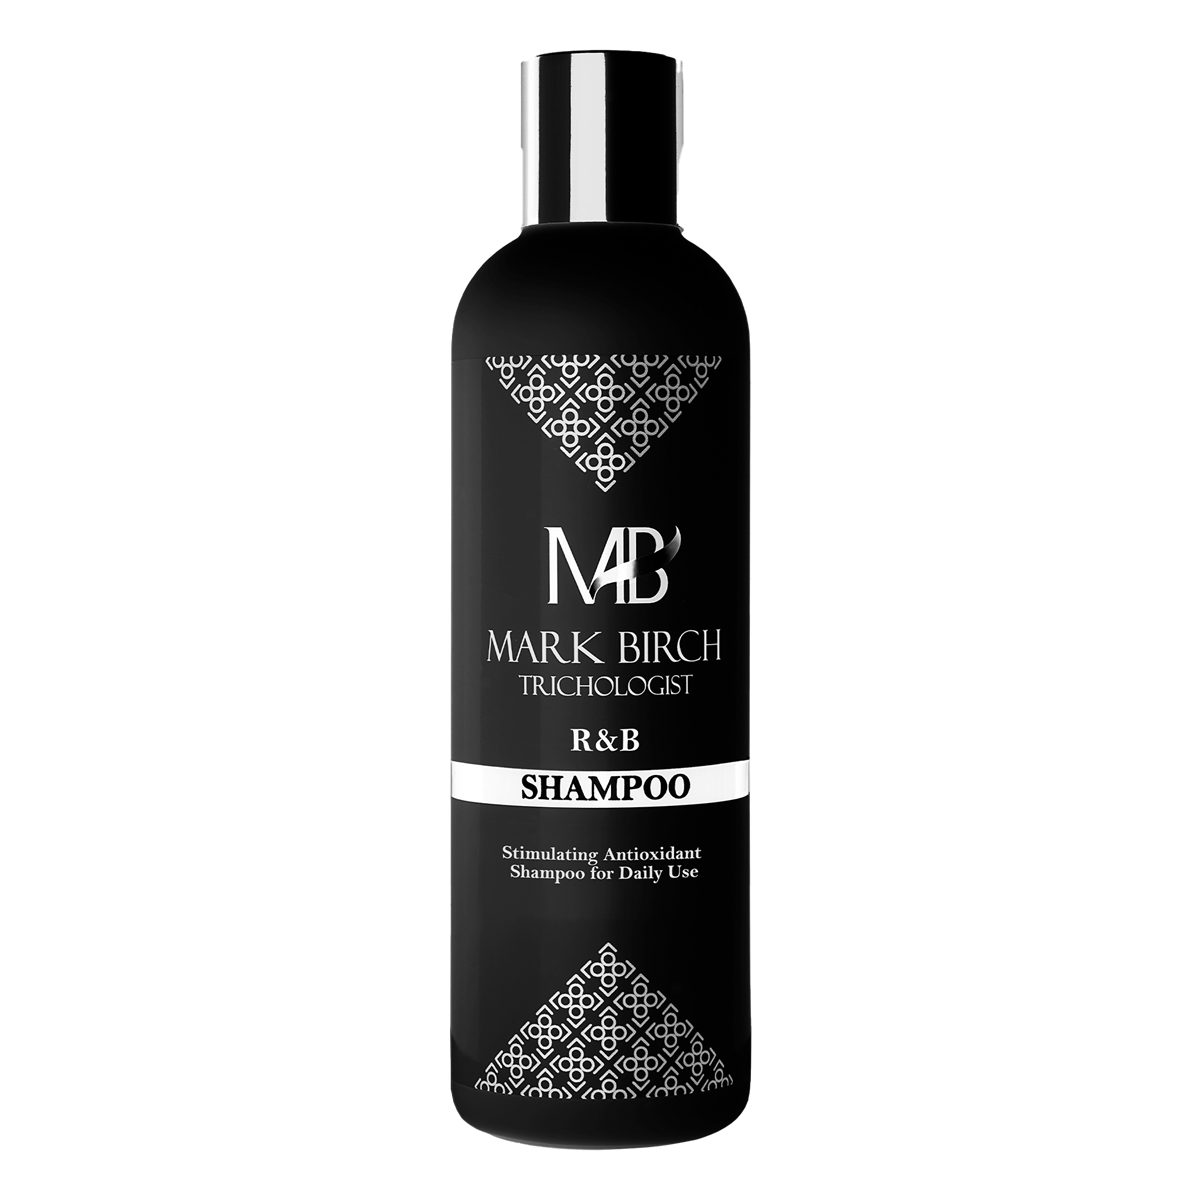 R&B Antioxidant Shampoo & Conditioner